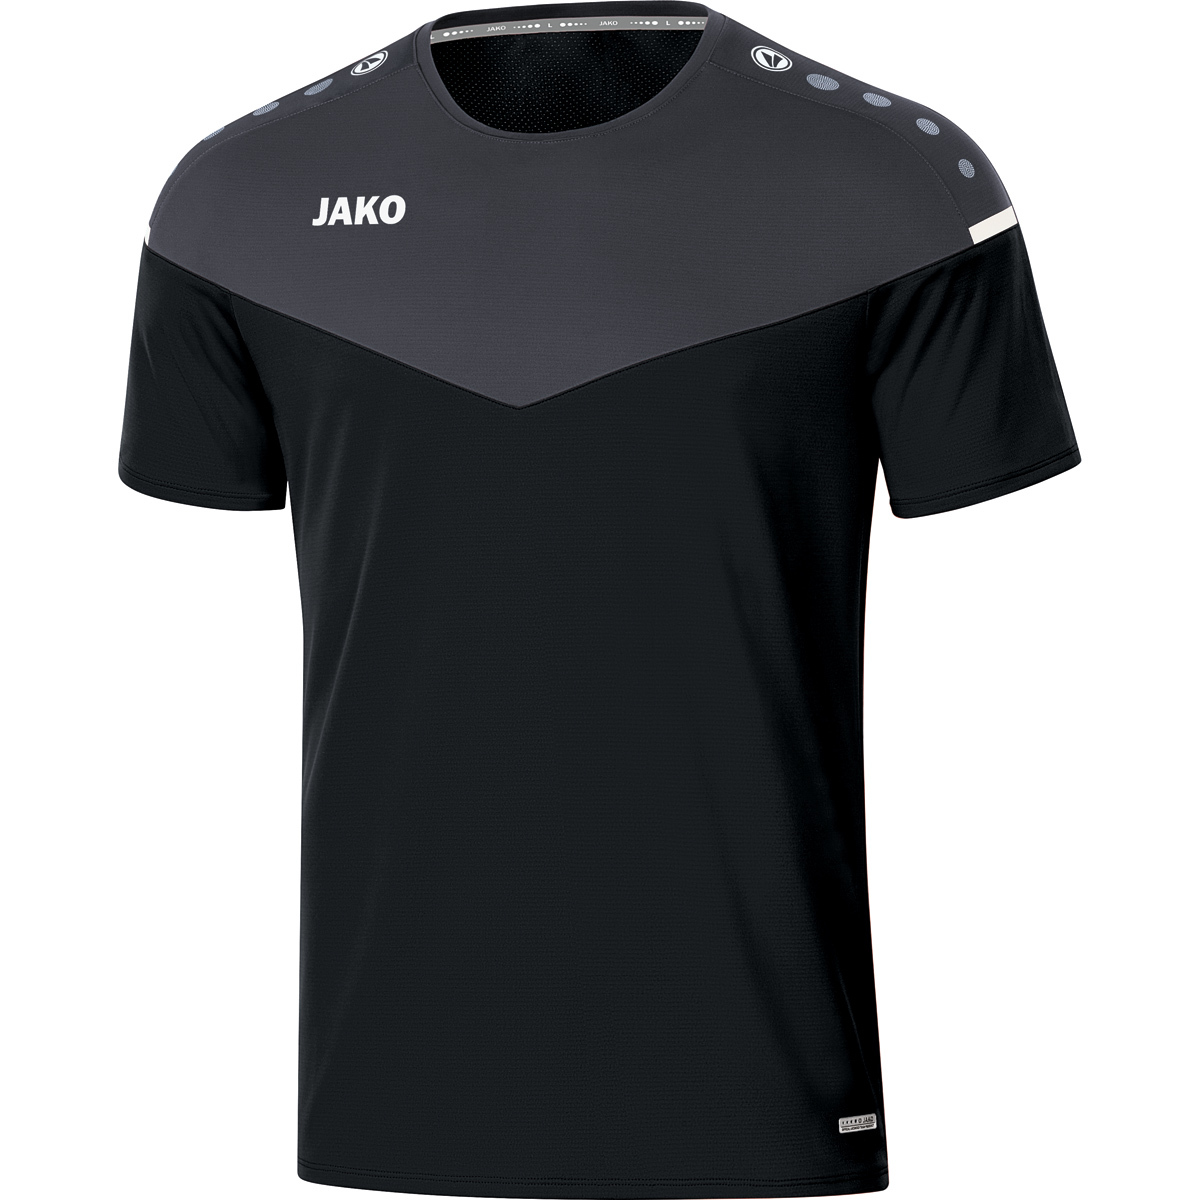 JAKO T-Shirt XXL, 2.0 schwarz/anthrazit, Herren, Gr. 6120 Champ